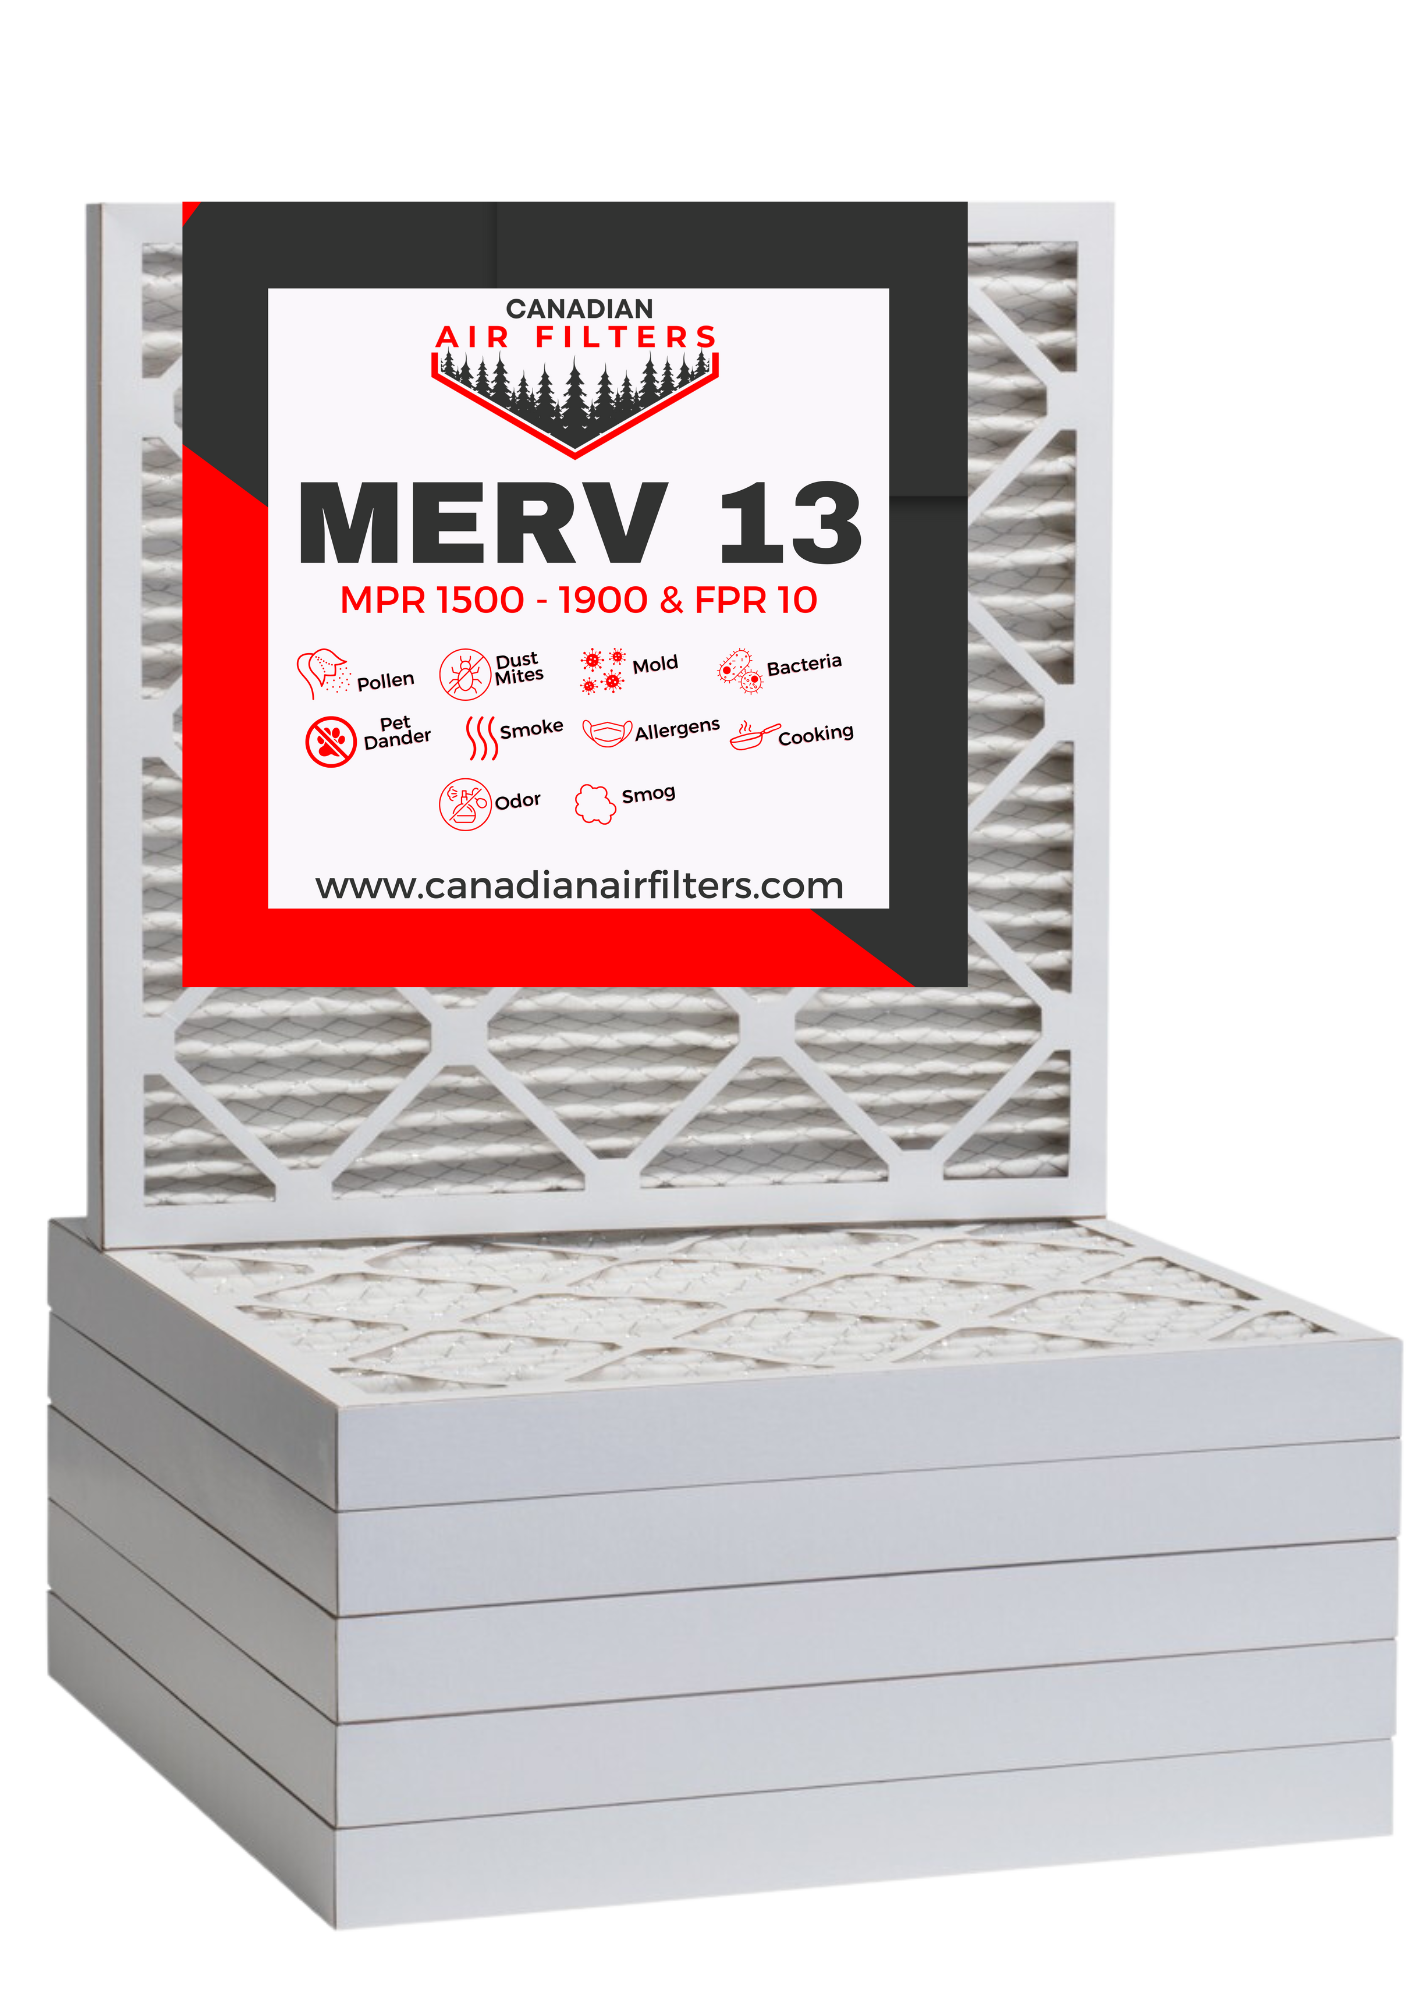 20 x 20 x 2 MERV 13 Pleated Air Filter (06 pack)